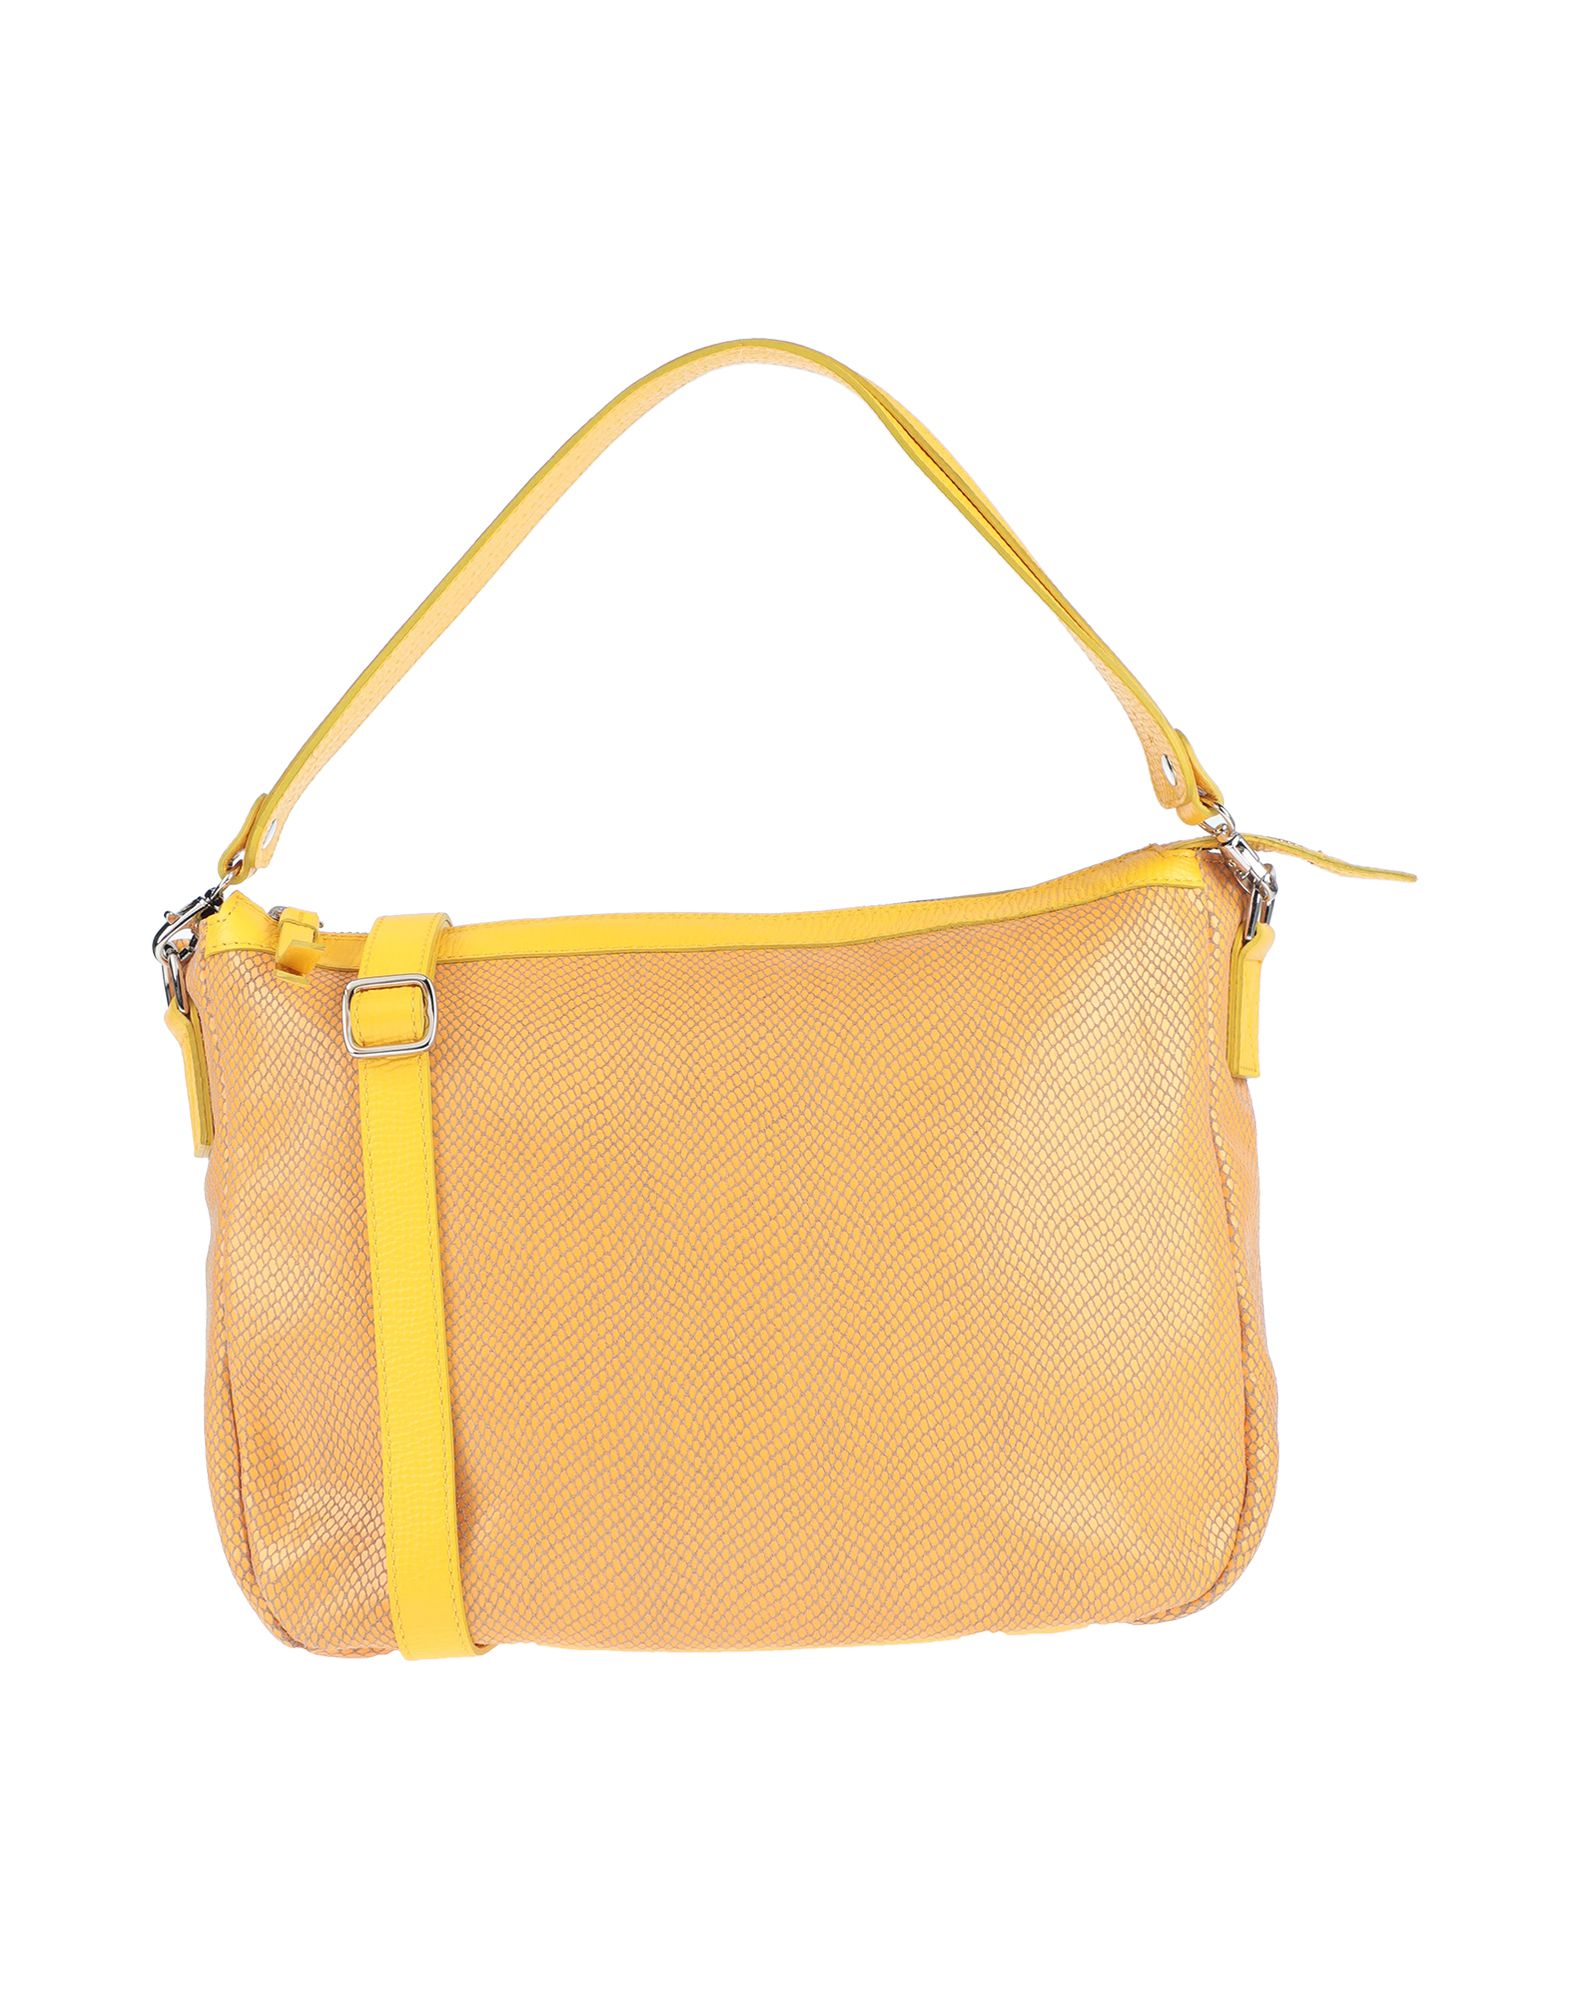 CATERINA LUCCHI Handbags